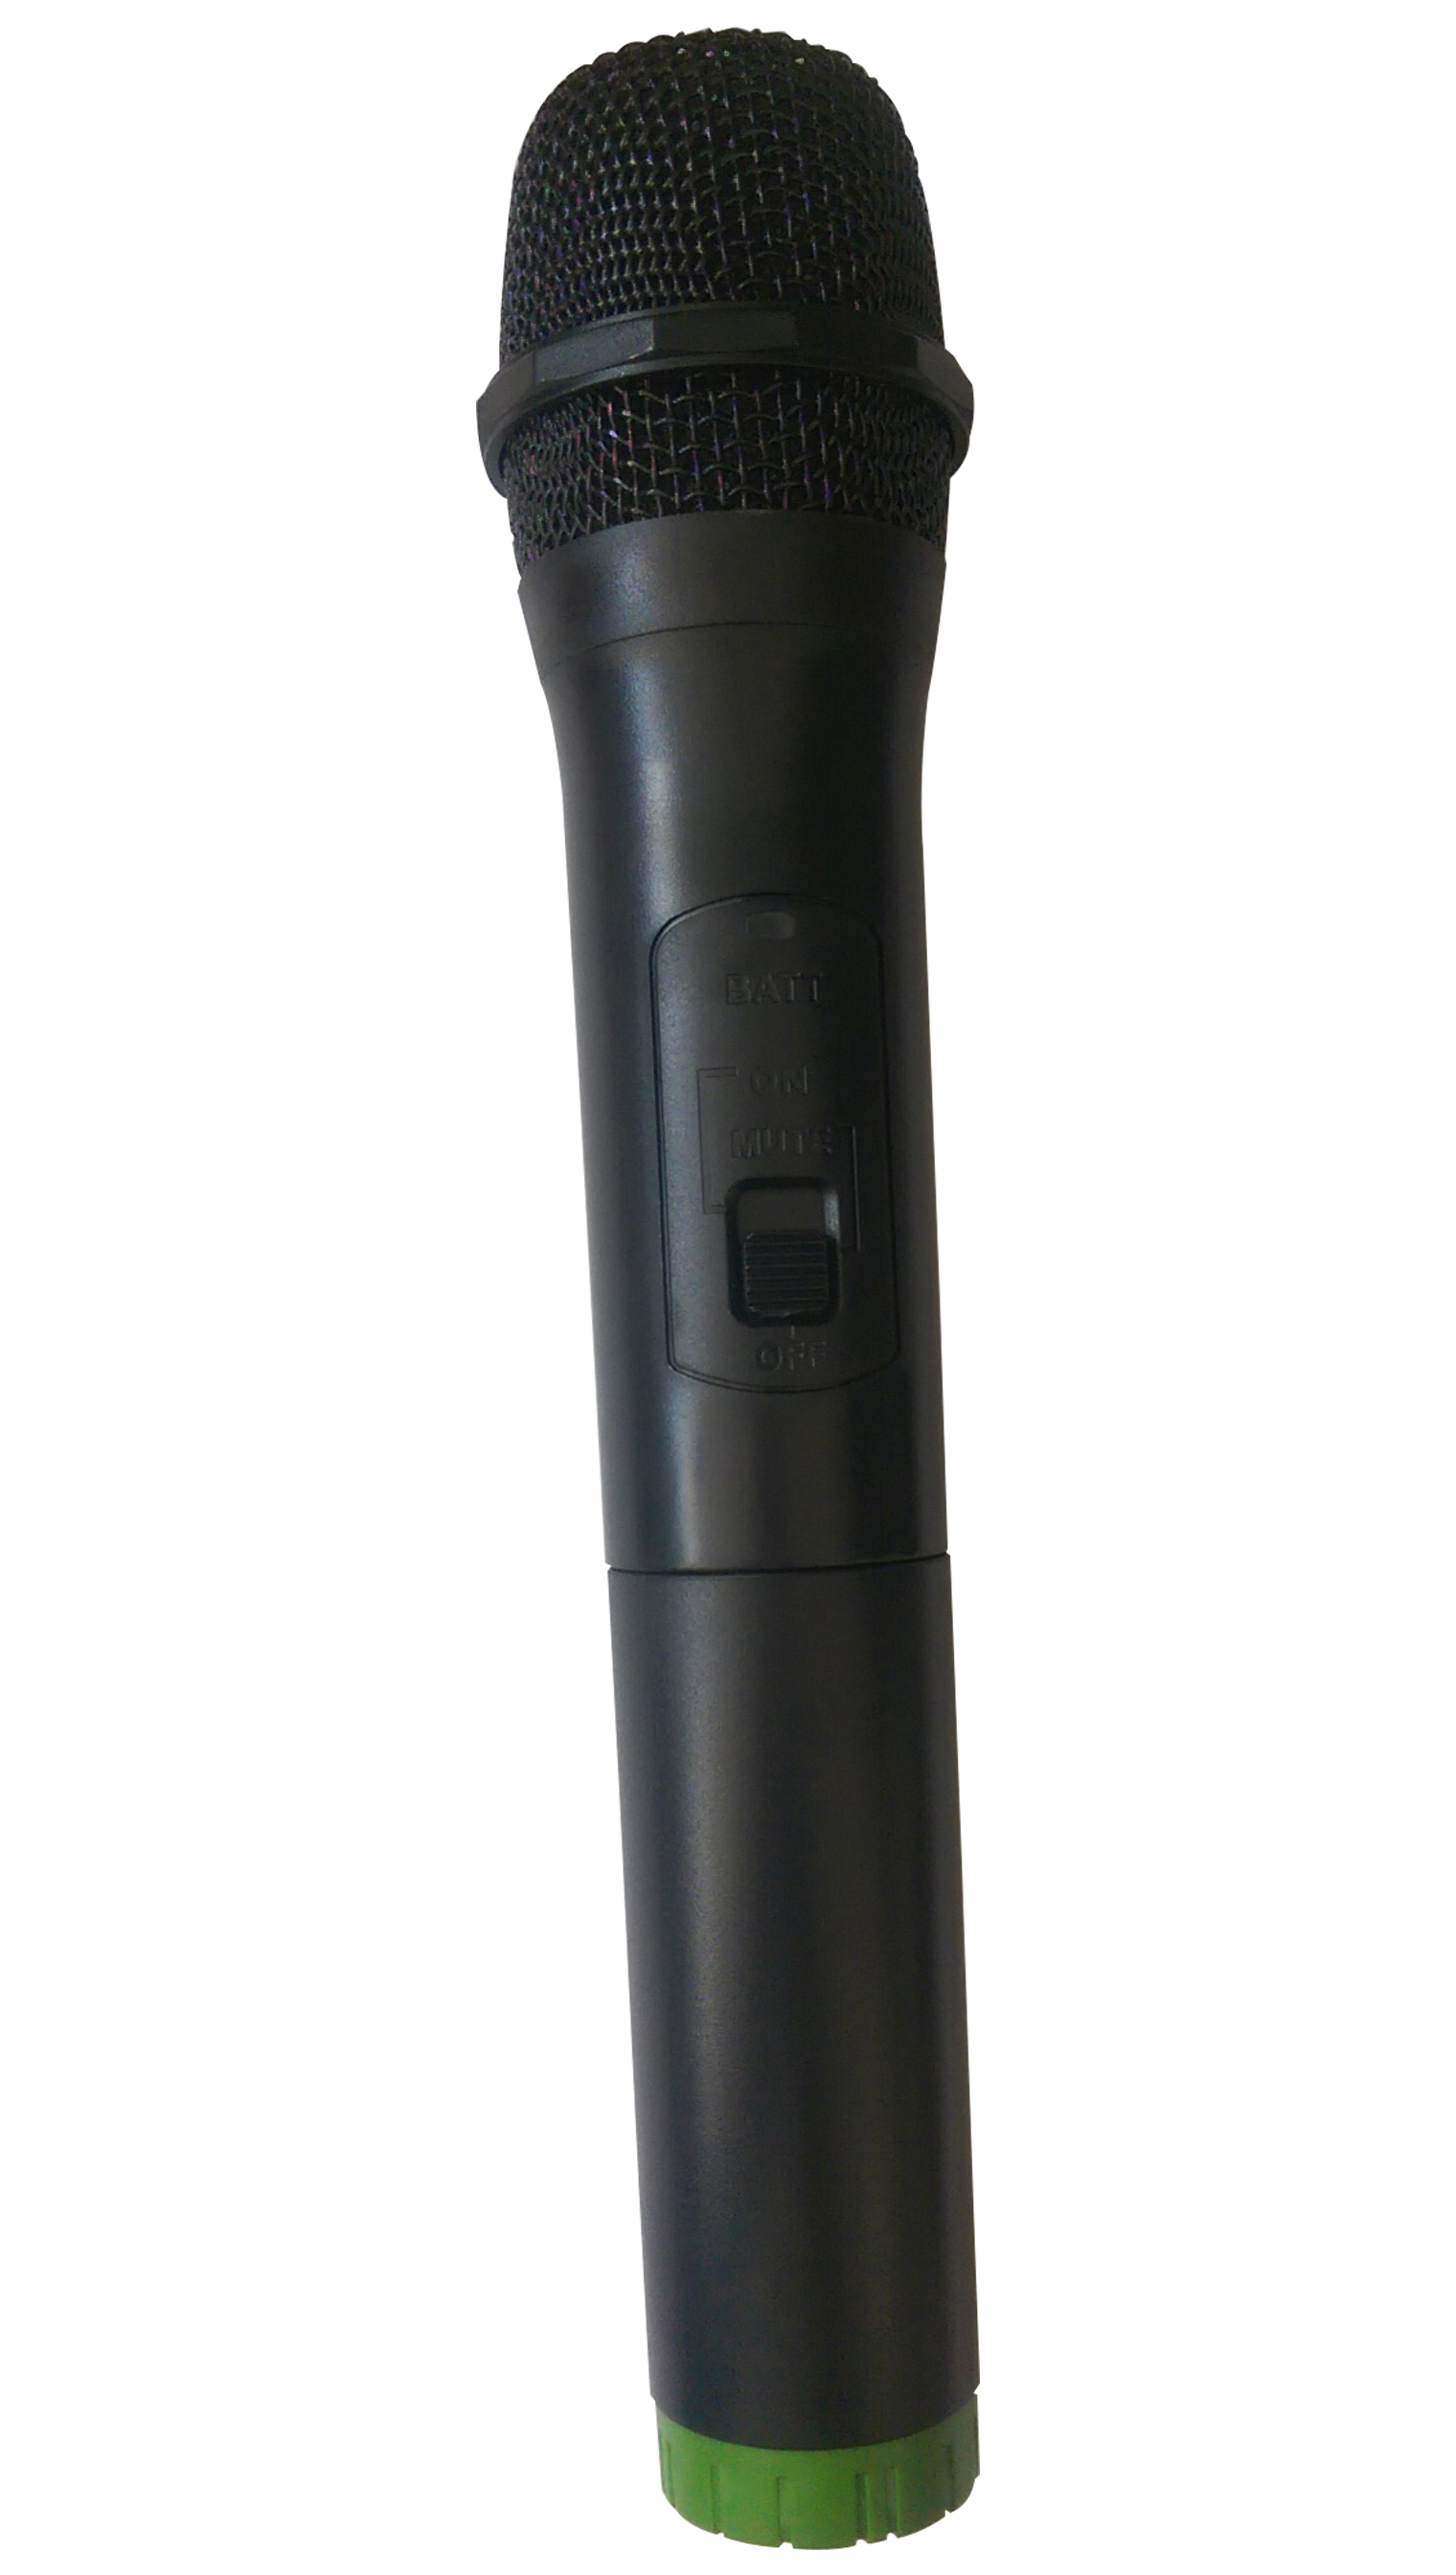 Microfon profesional, wireless cu receptor usb/jack 6.3mm